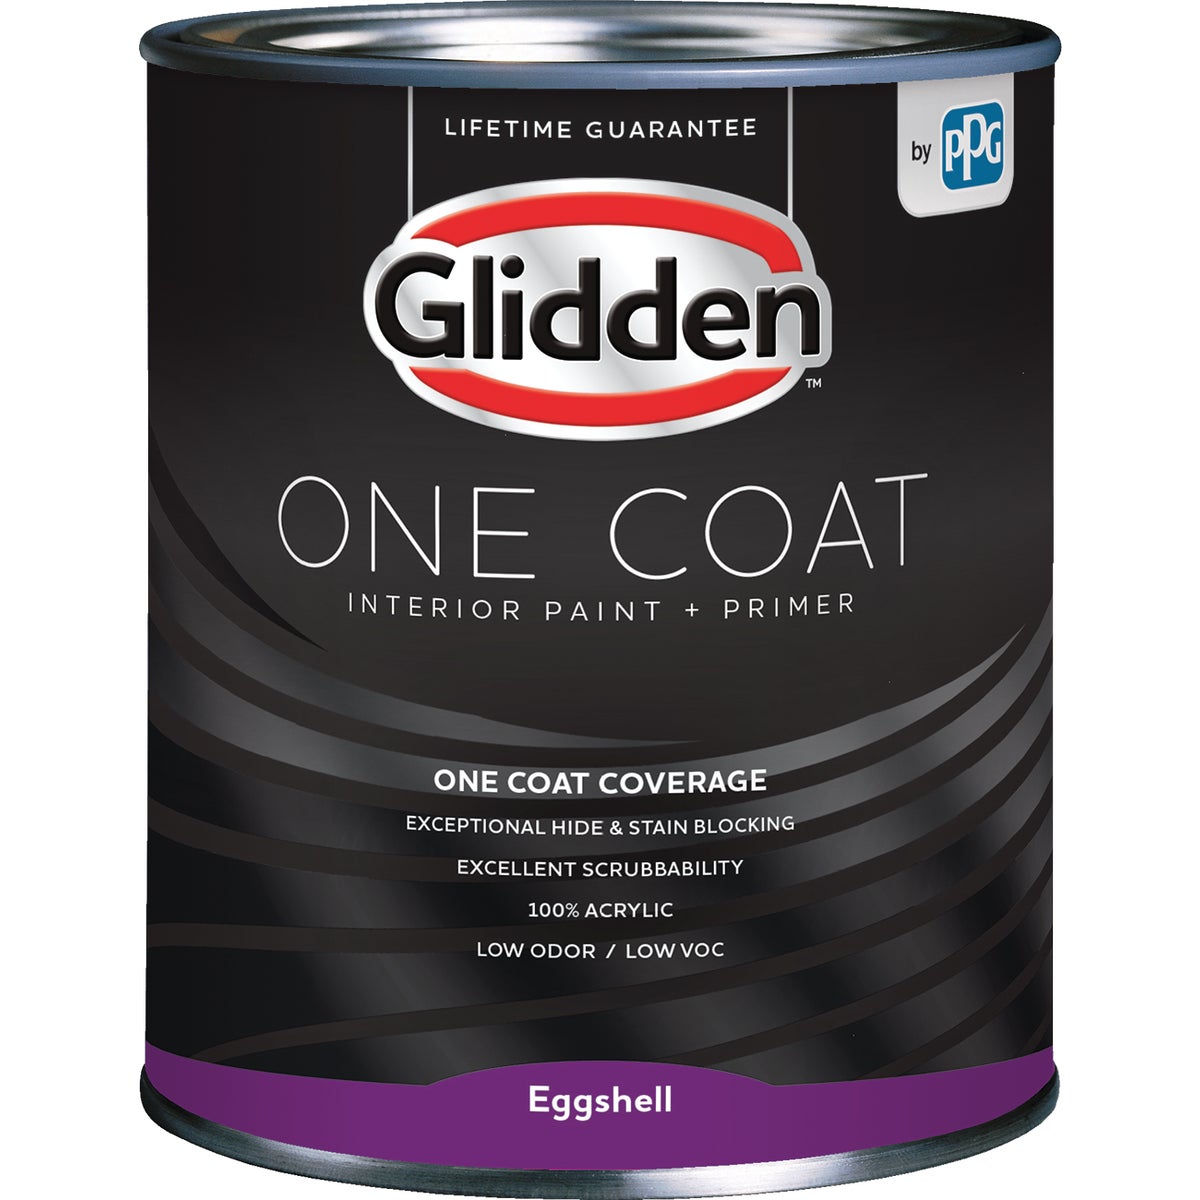 Glidden One Coat Interior Paint + Primer Eggshell Midtone Base Quart